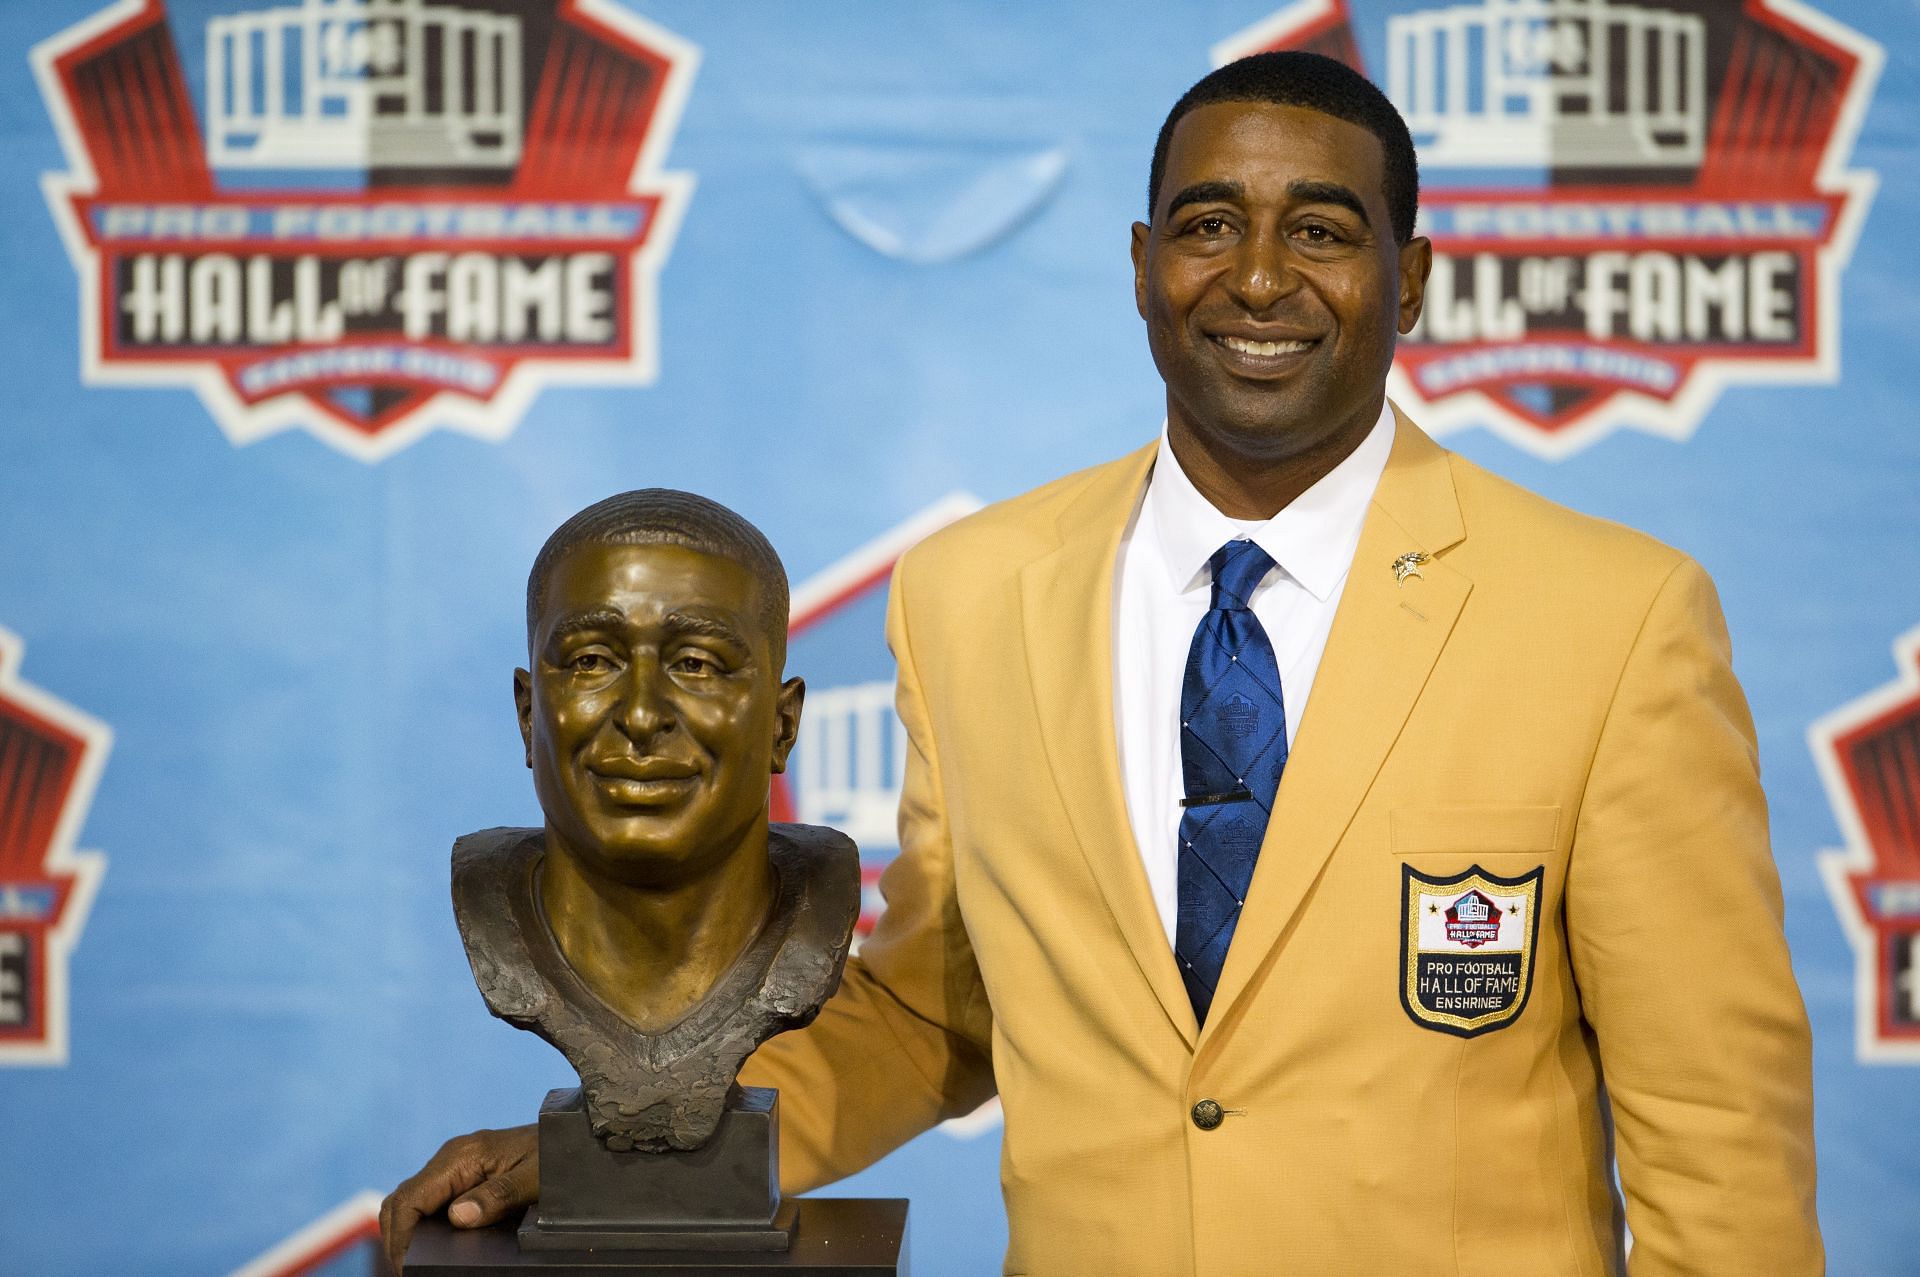 NFL Hall of Fame wide receiver Cris Carter